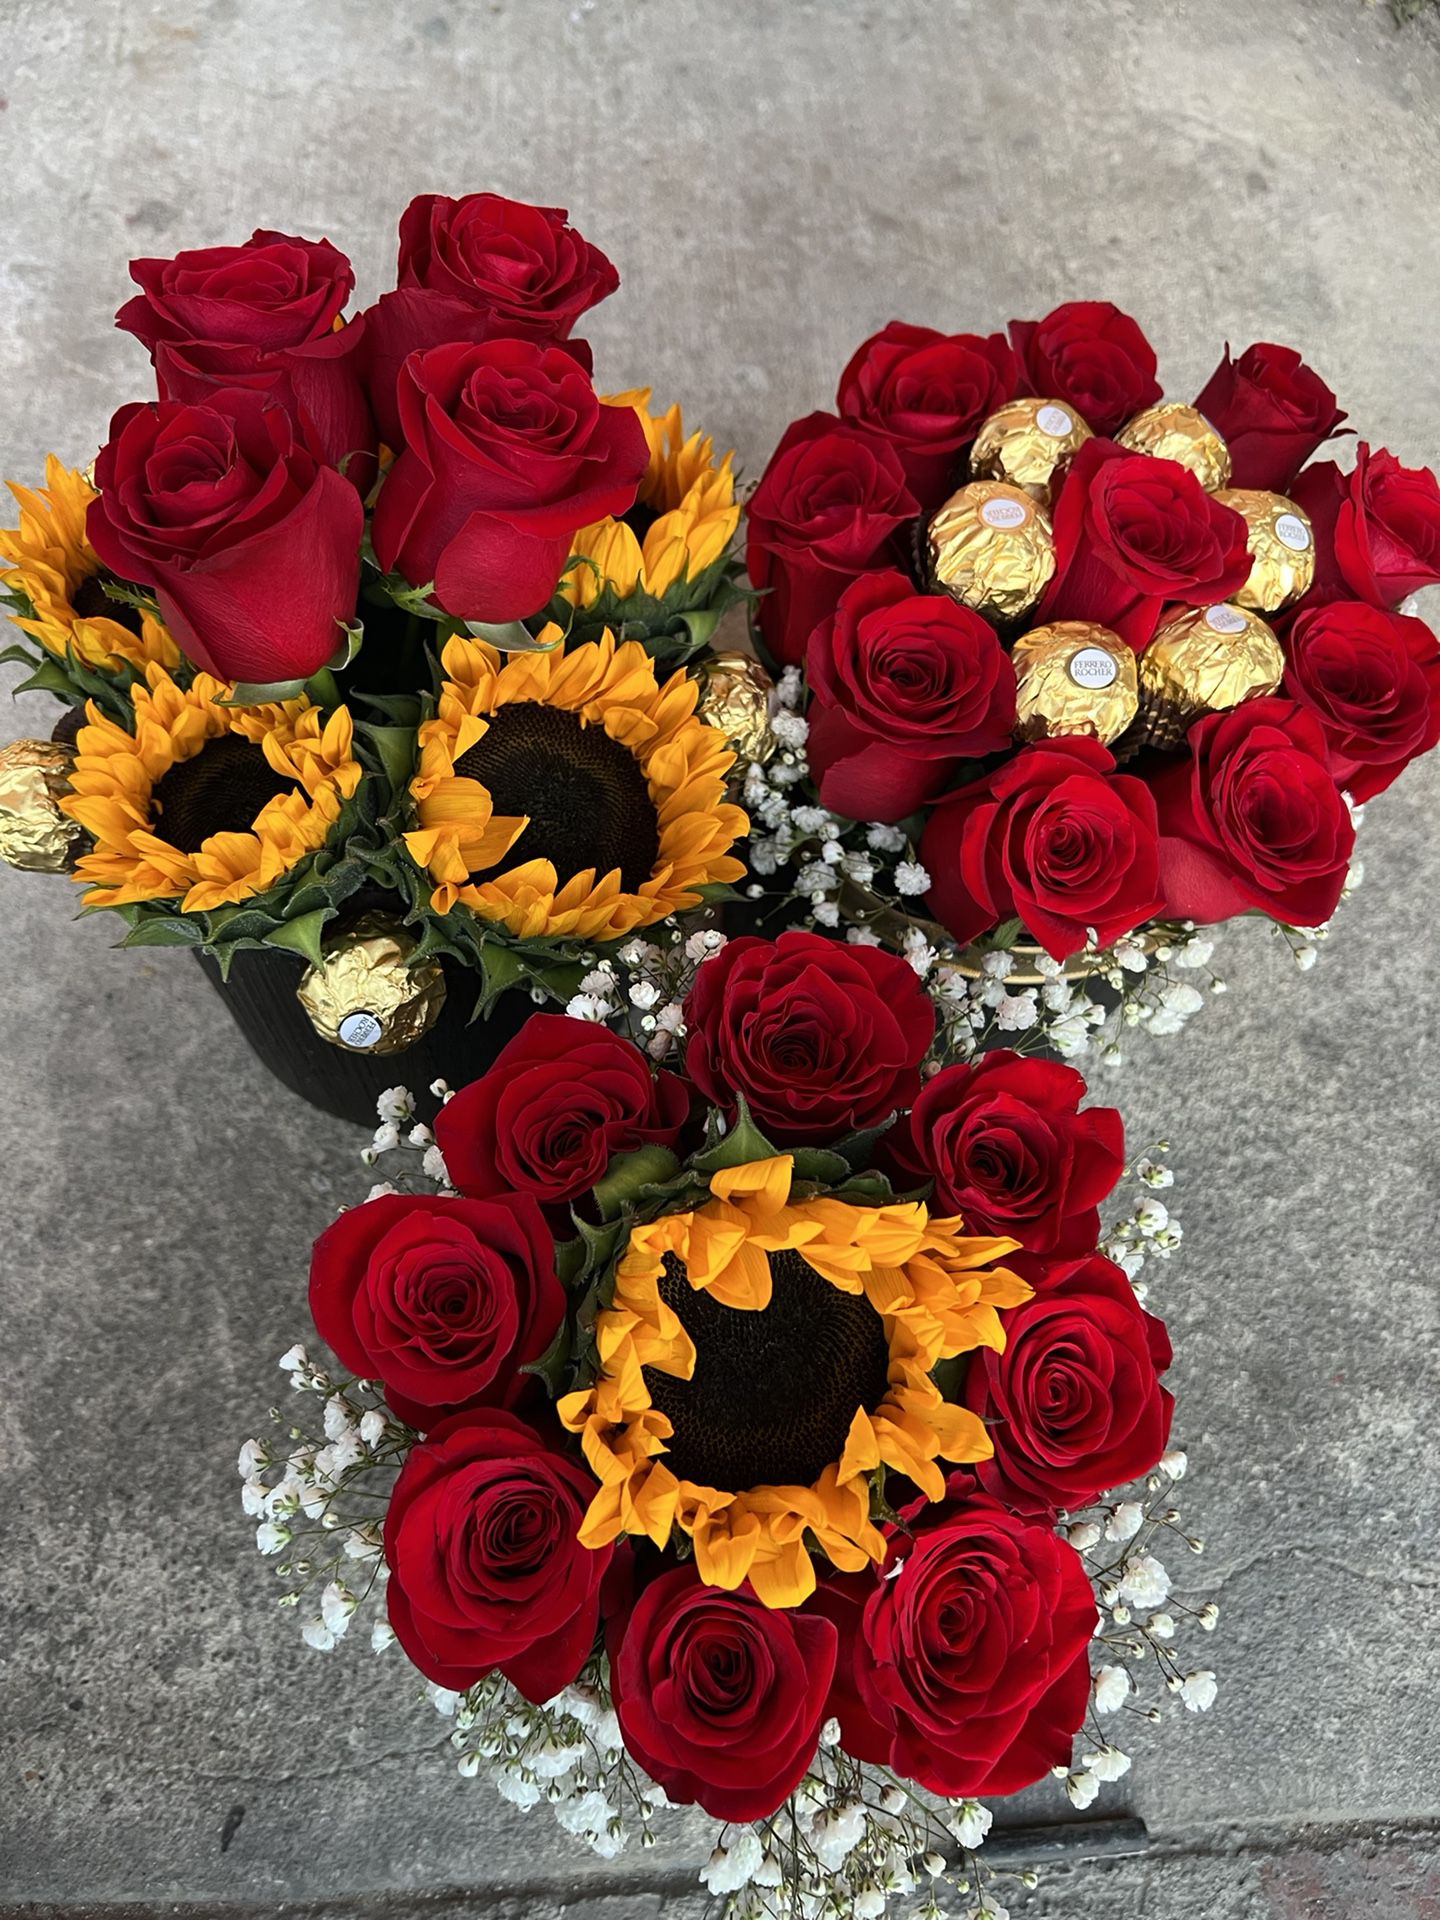 Floral Arrangements For Valentine’s Day 